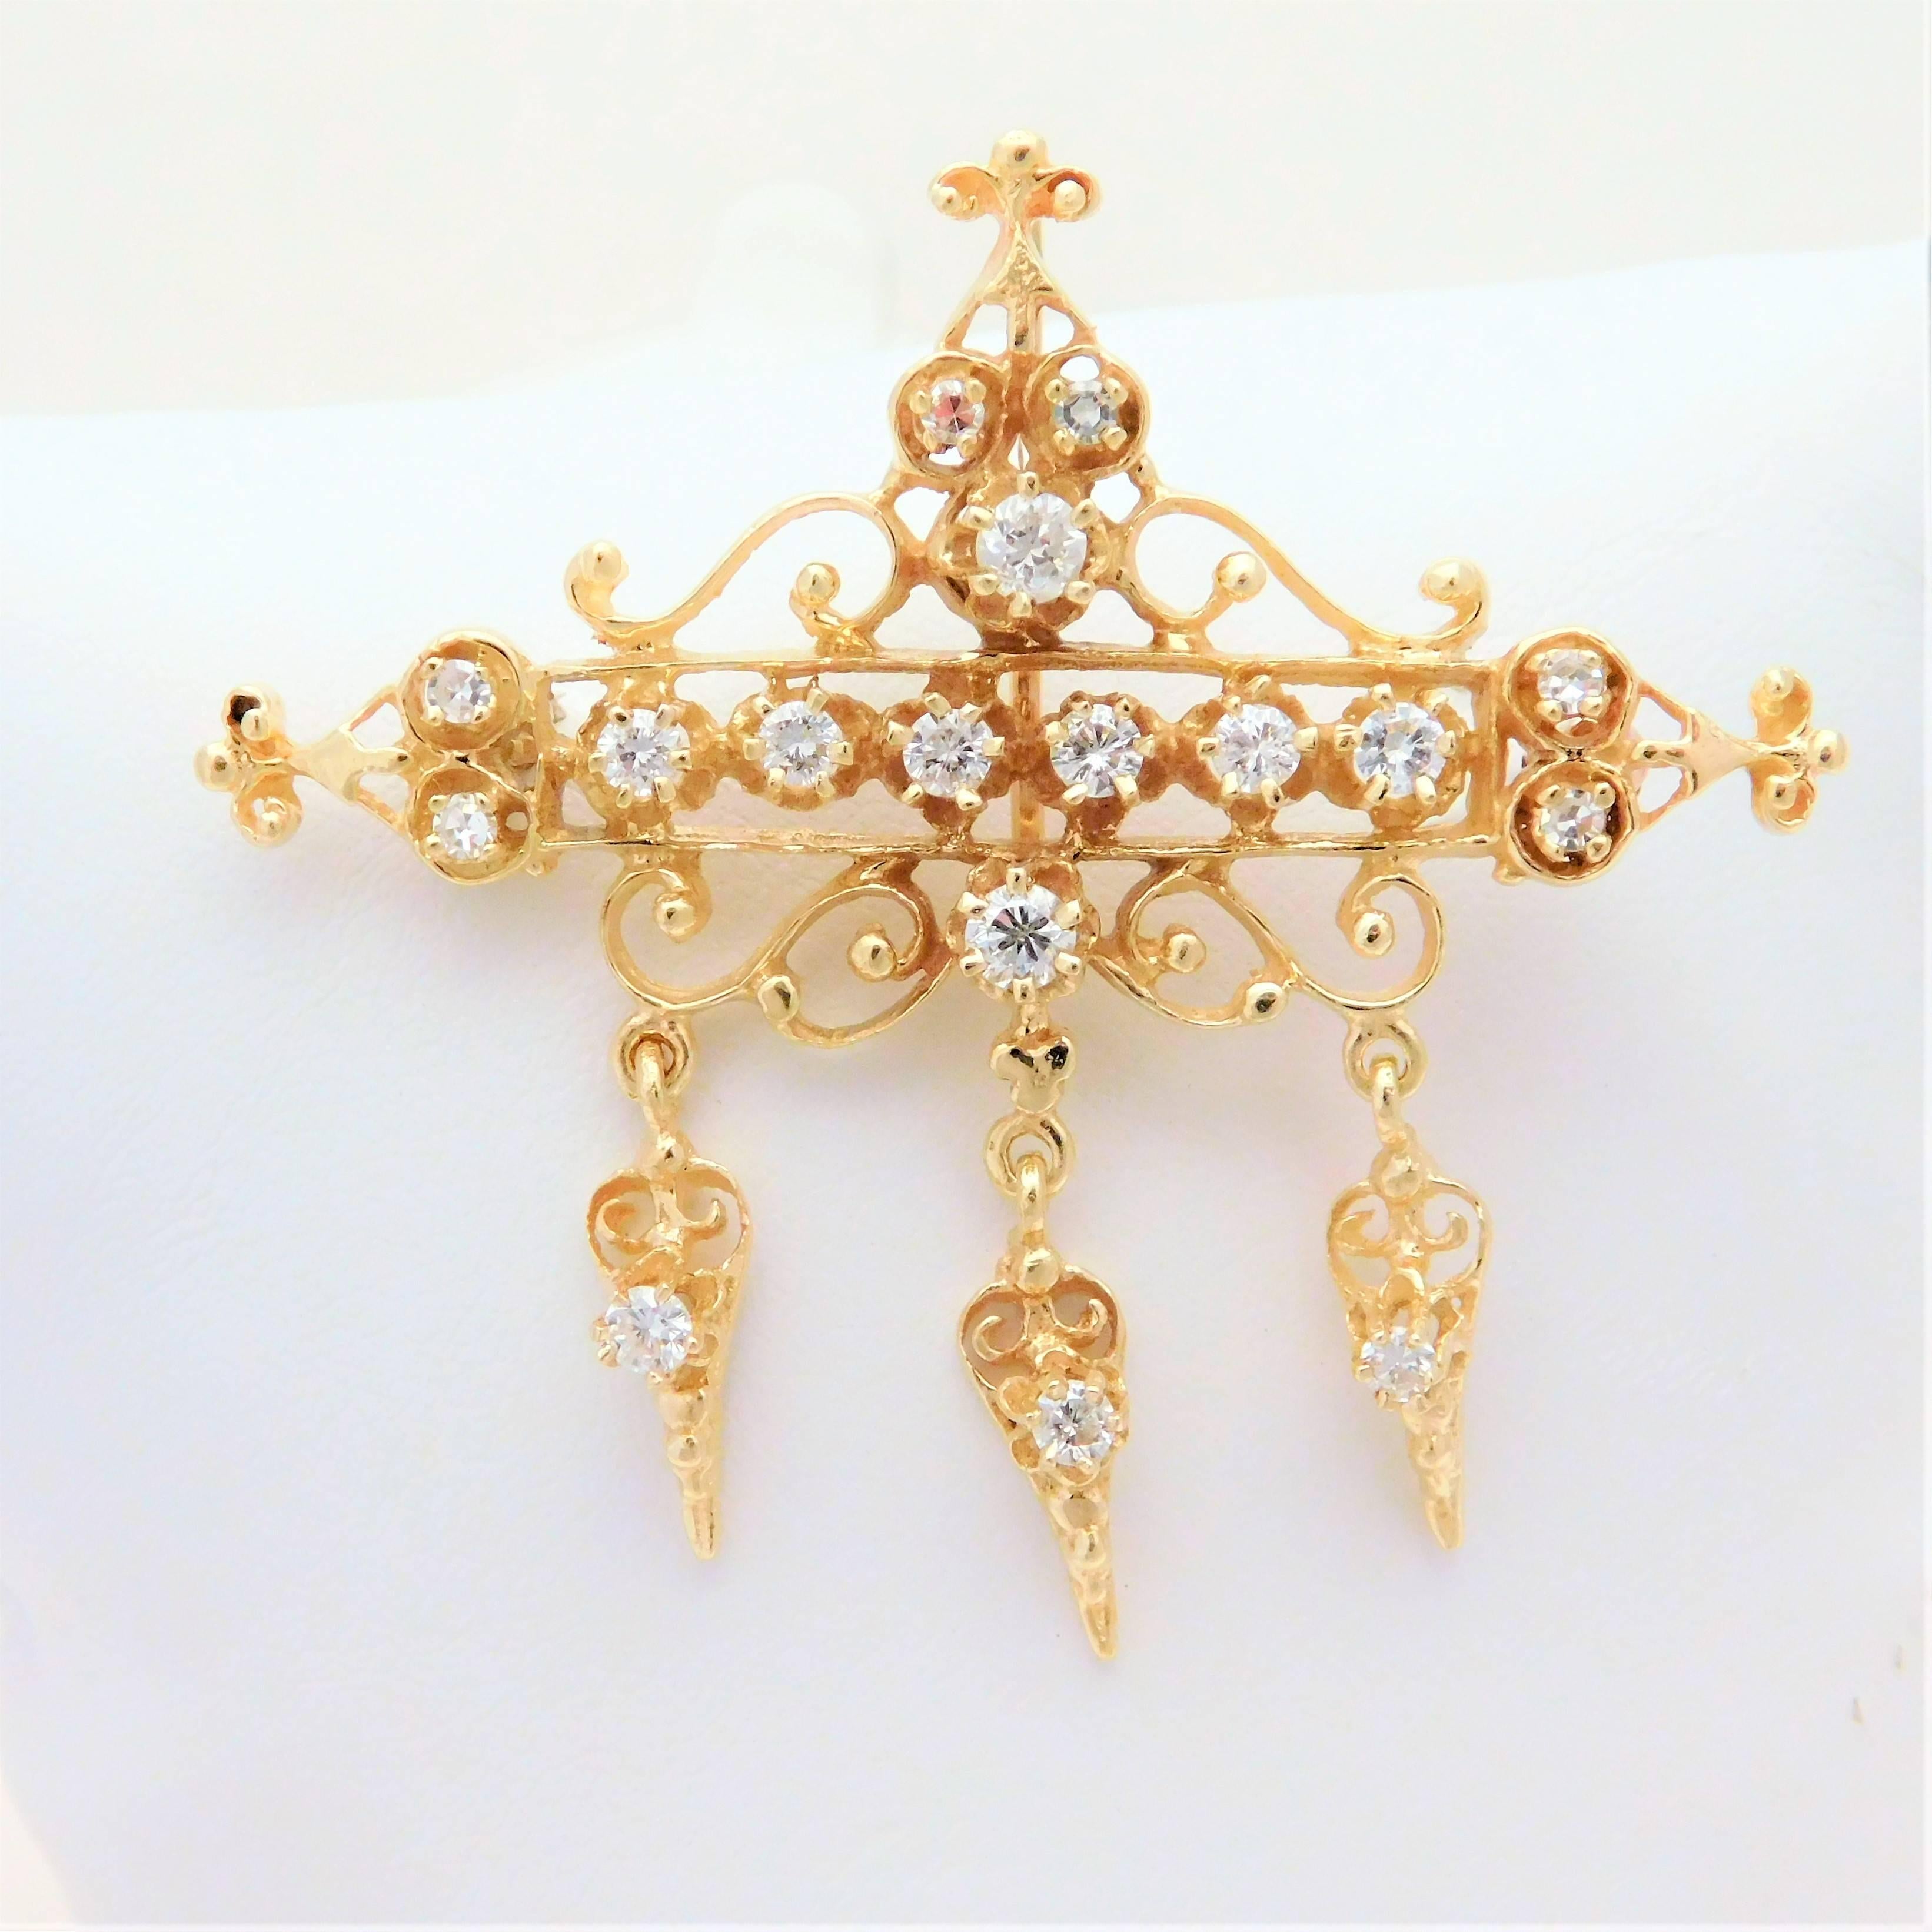 Baroque Antique 14 Karat Gold and Diamond Brooch Pendant